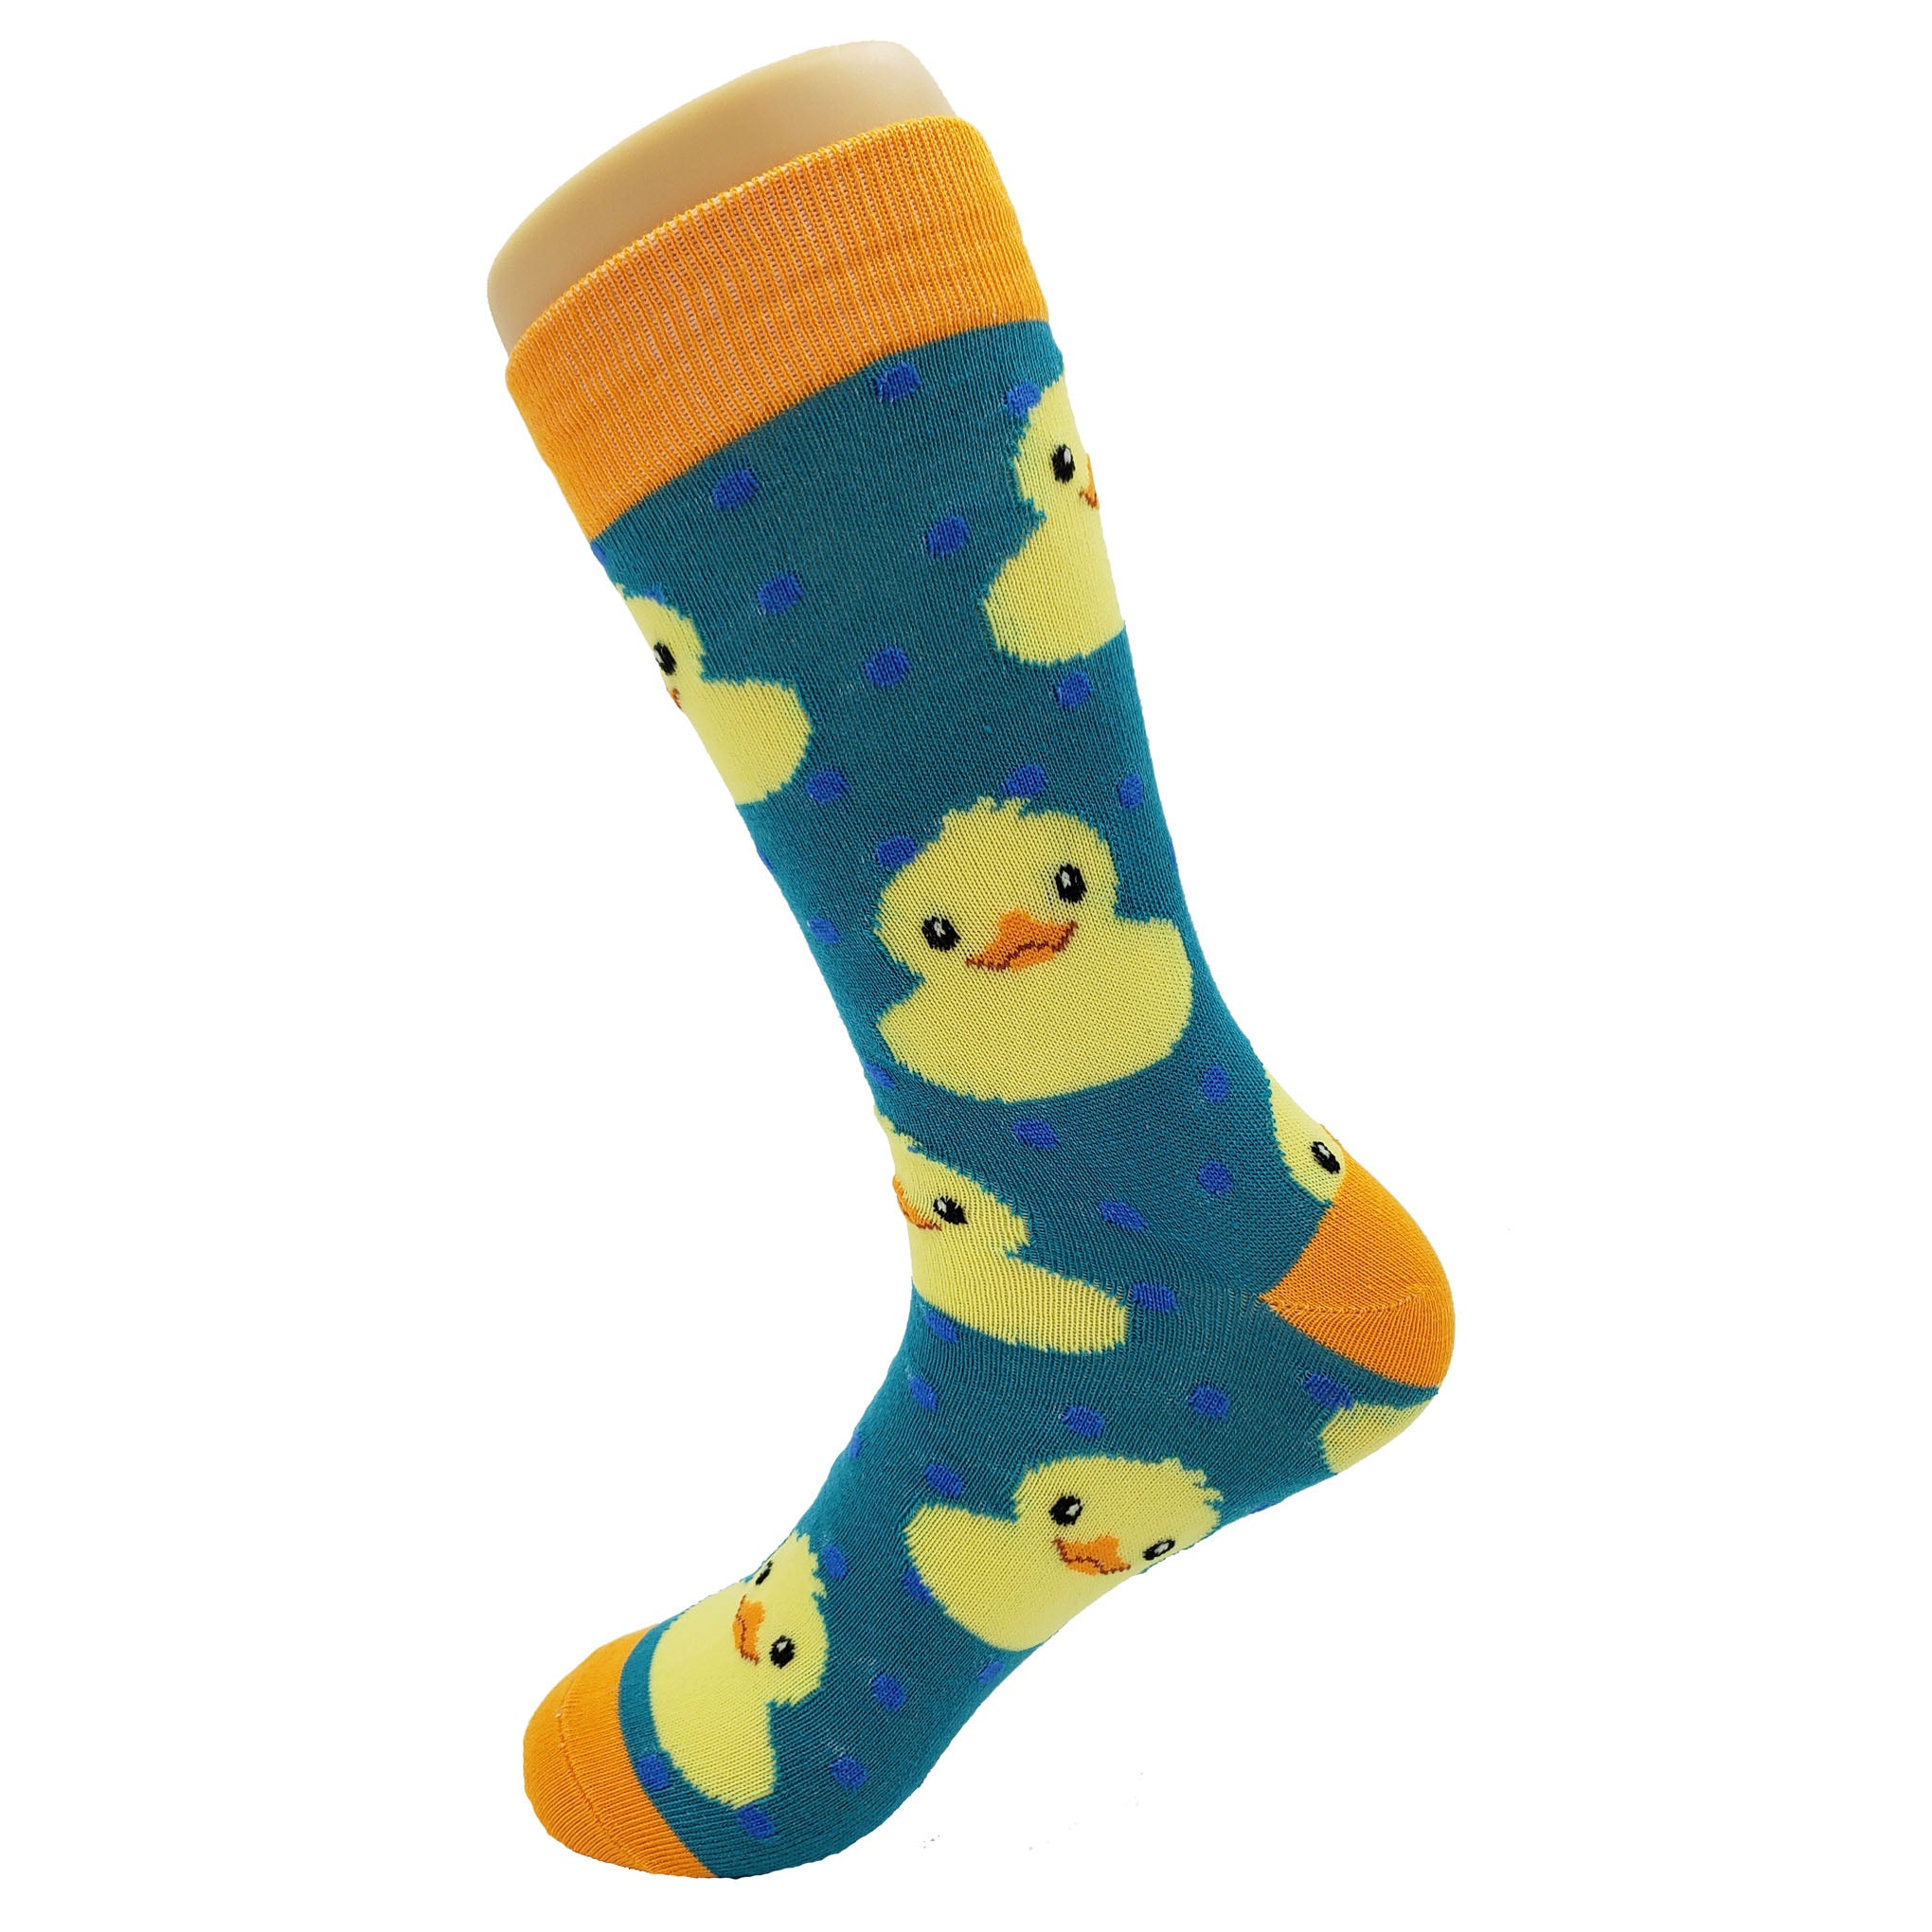 Huge Rubber Duck Socks - Fun and Crazy Socks at Sockfly.com